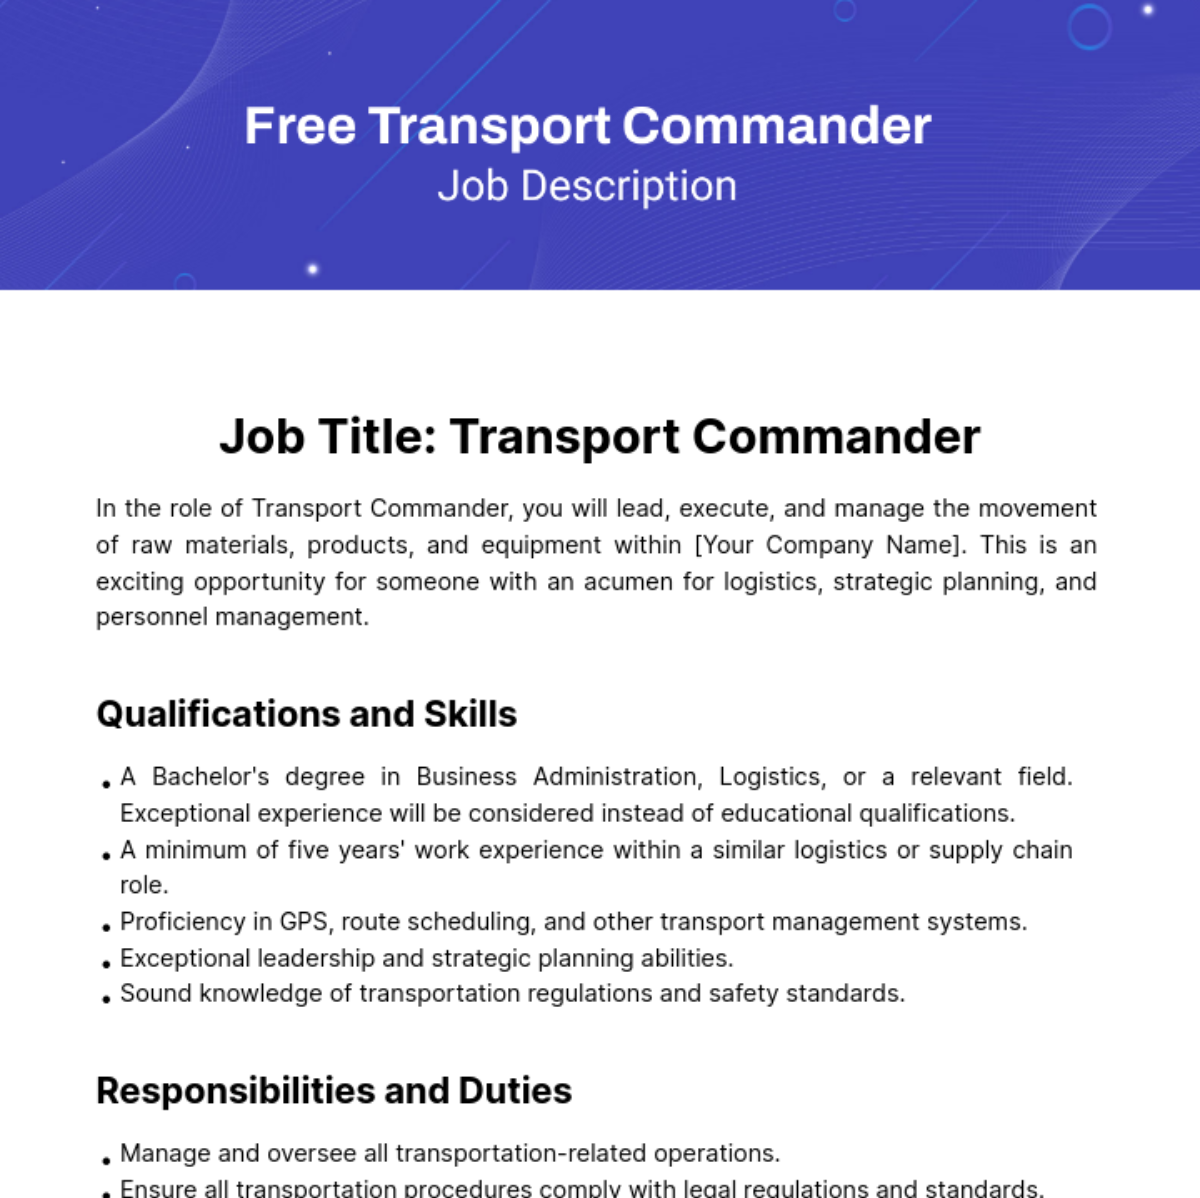 Free Transport Commander Job Description Template